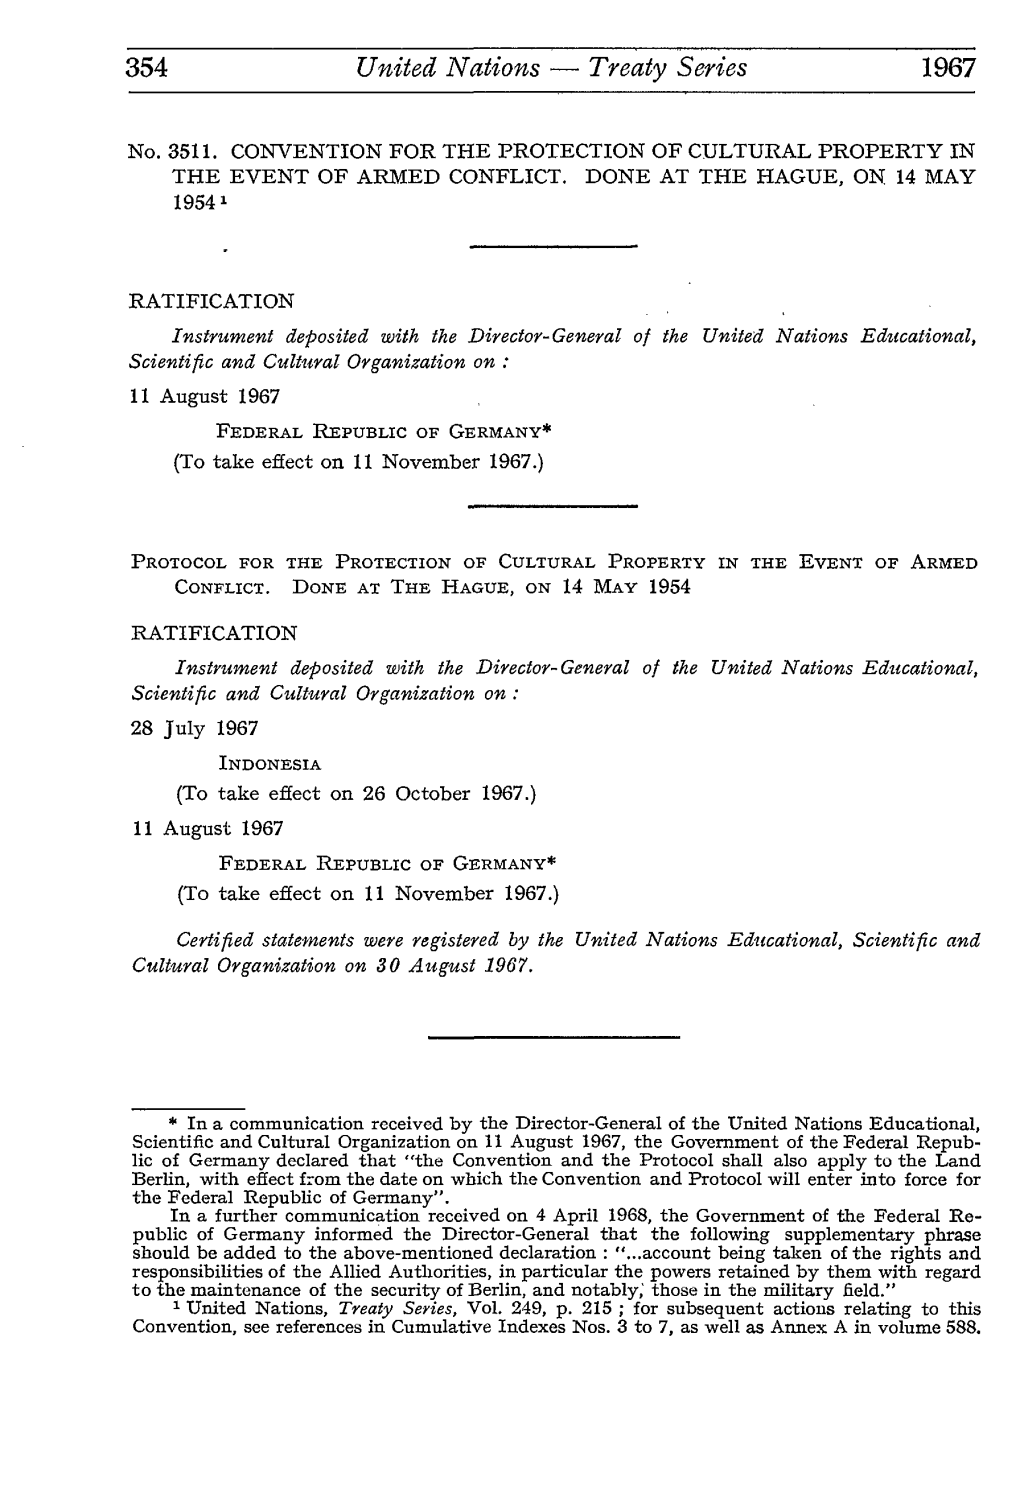 354 United Nations Treaty Series 1967